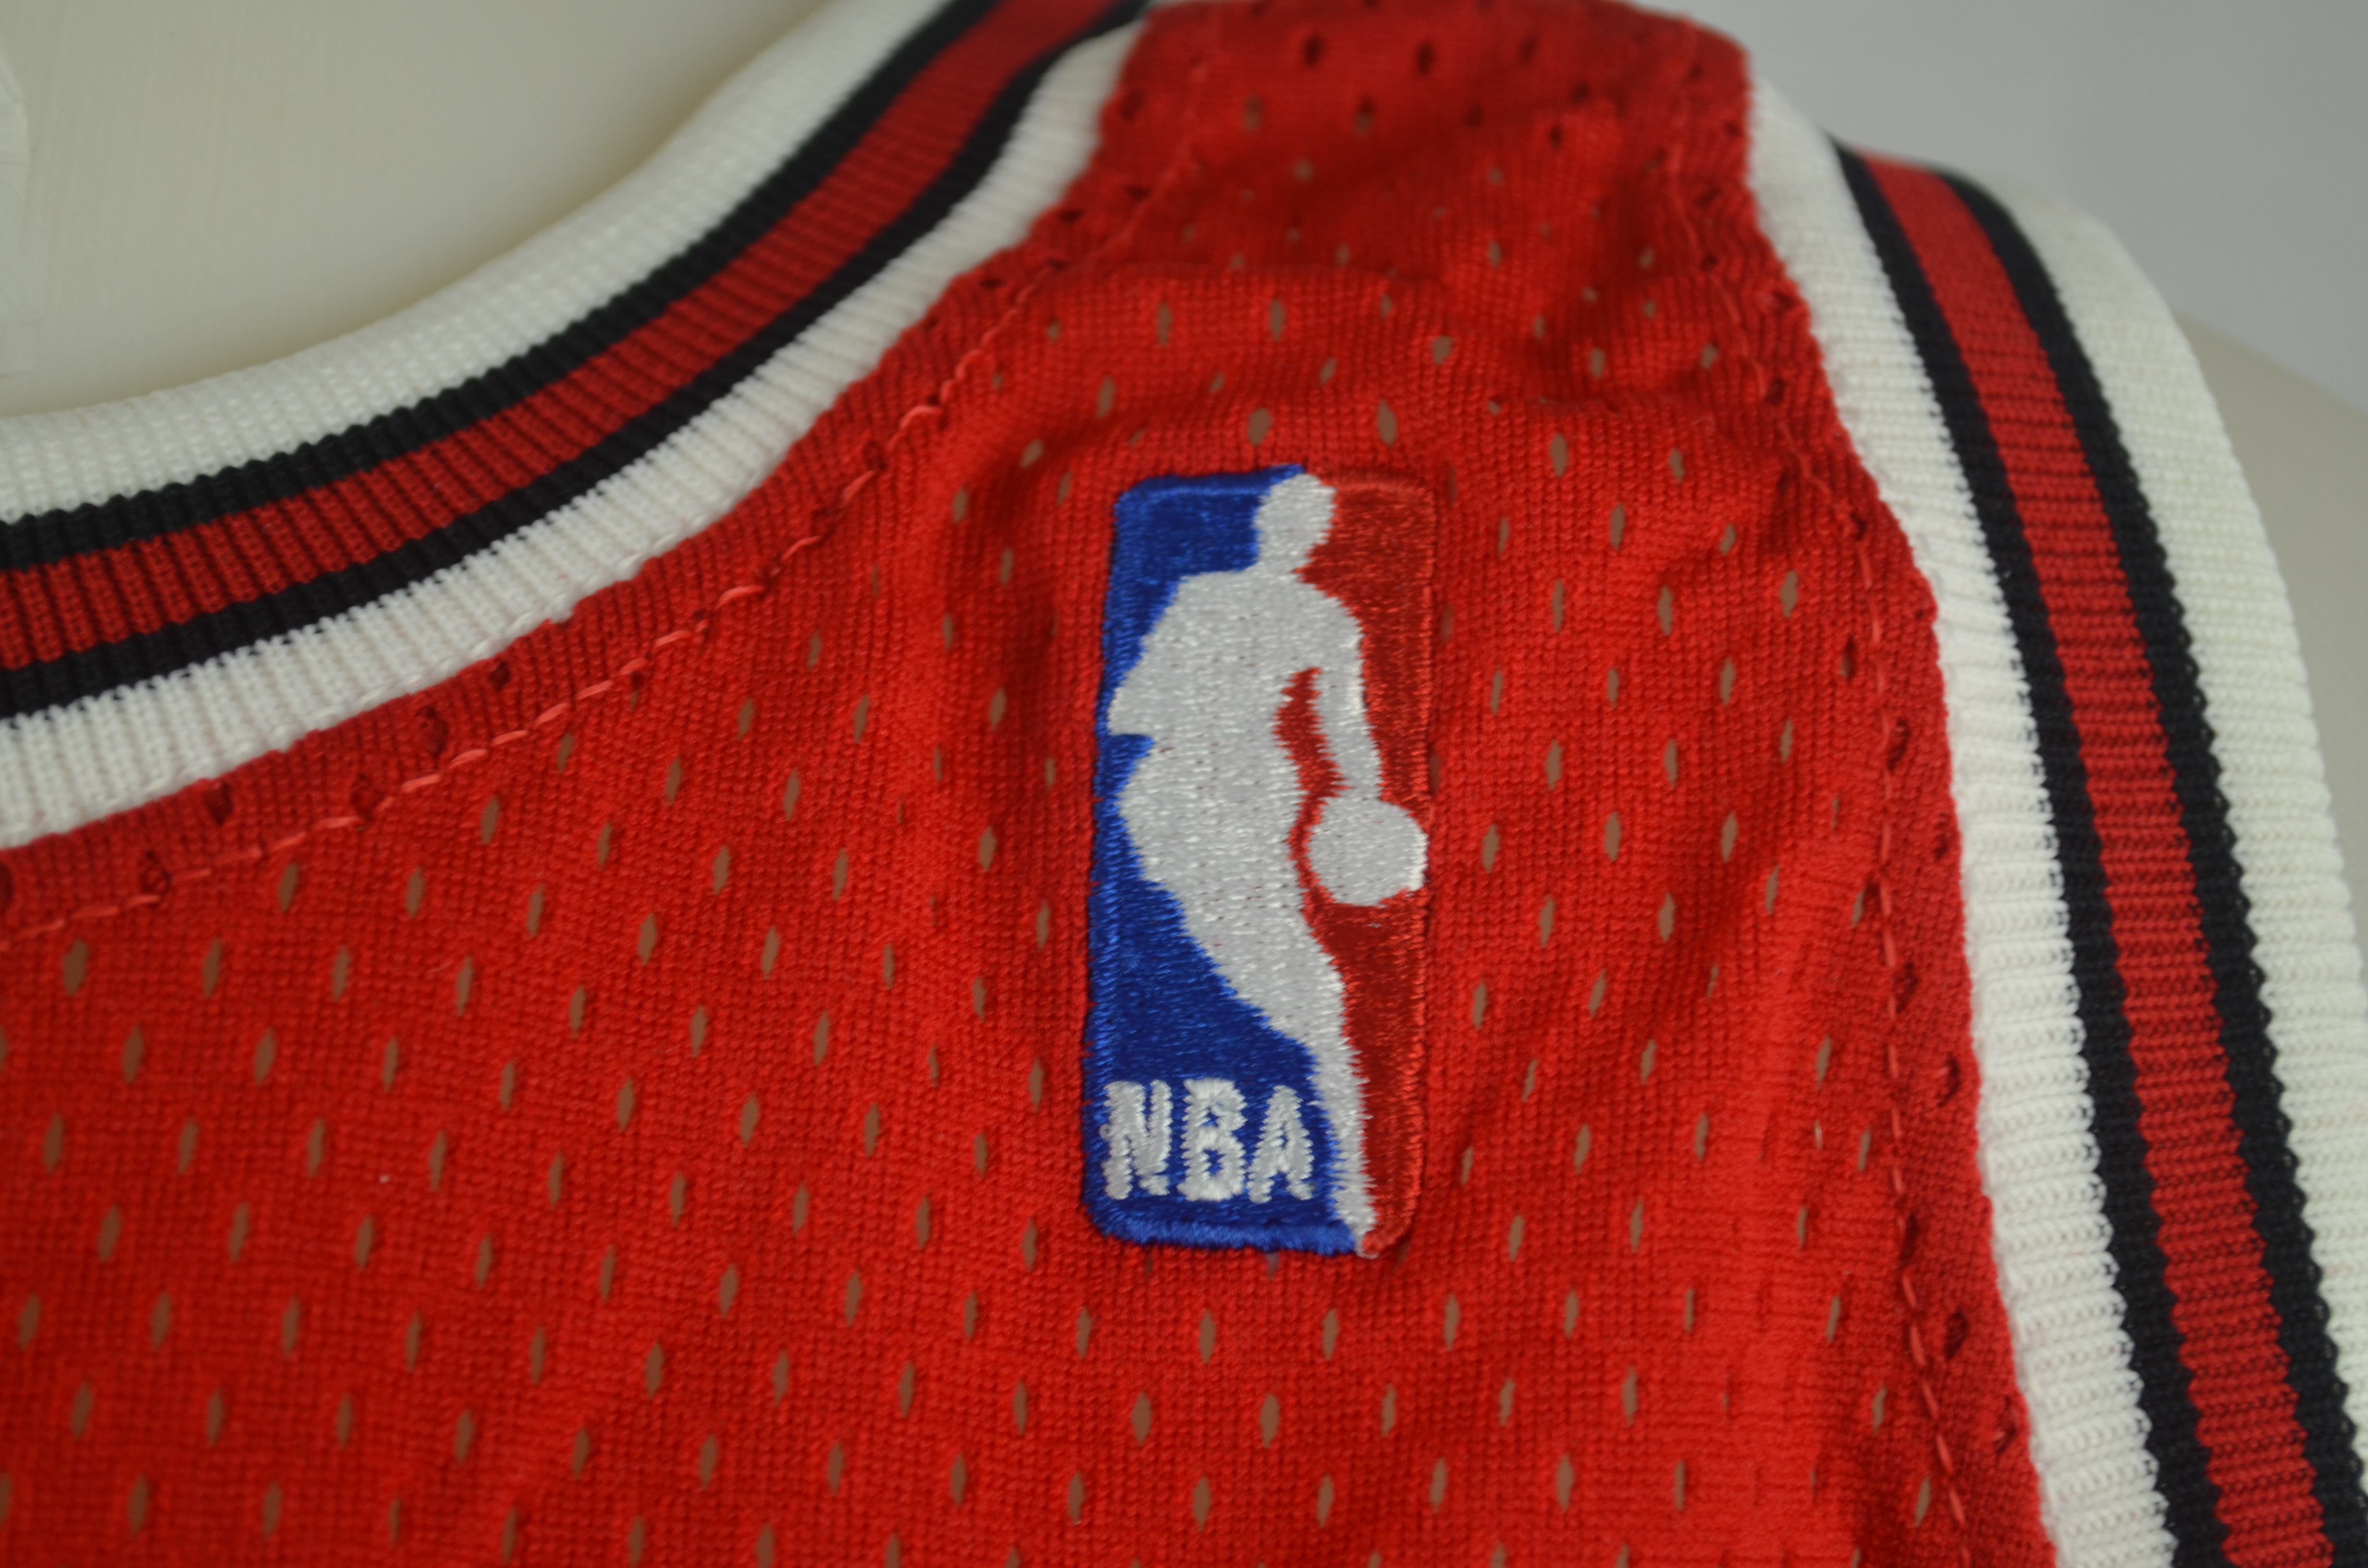 Michael Jordan 1994-95 Game Worn Chicago Bulls 45 Jersey LOA No  Provenance/wear